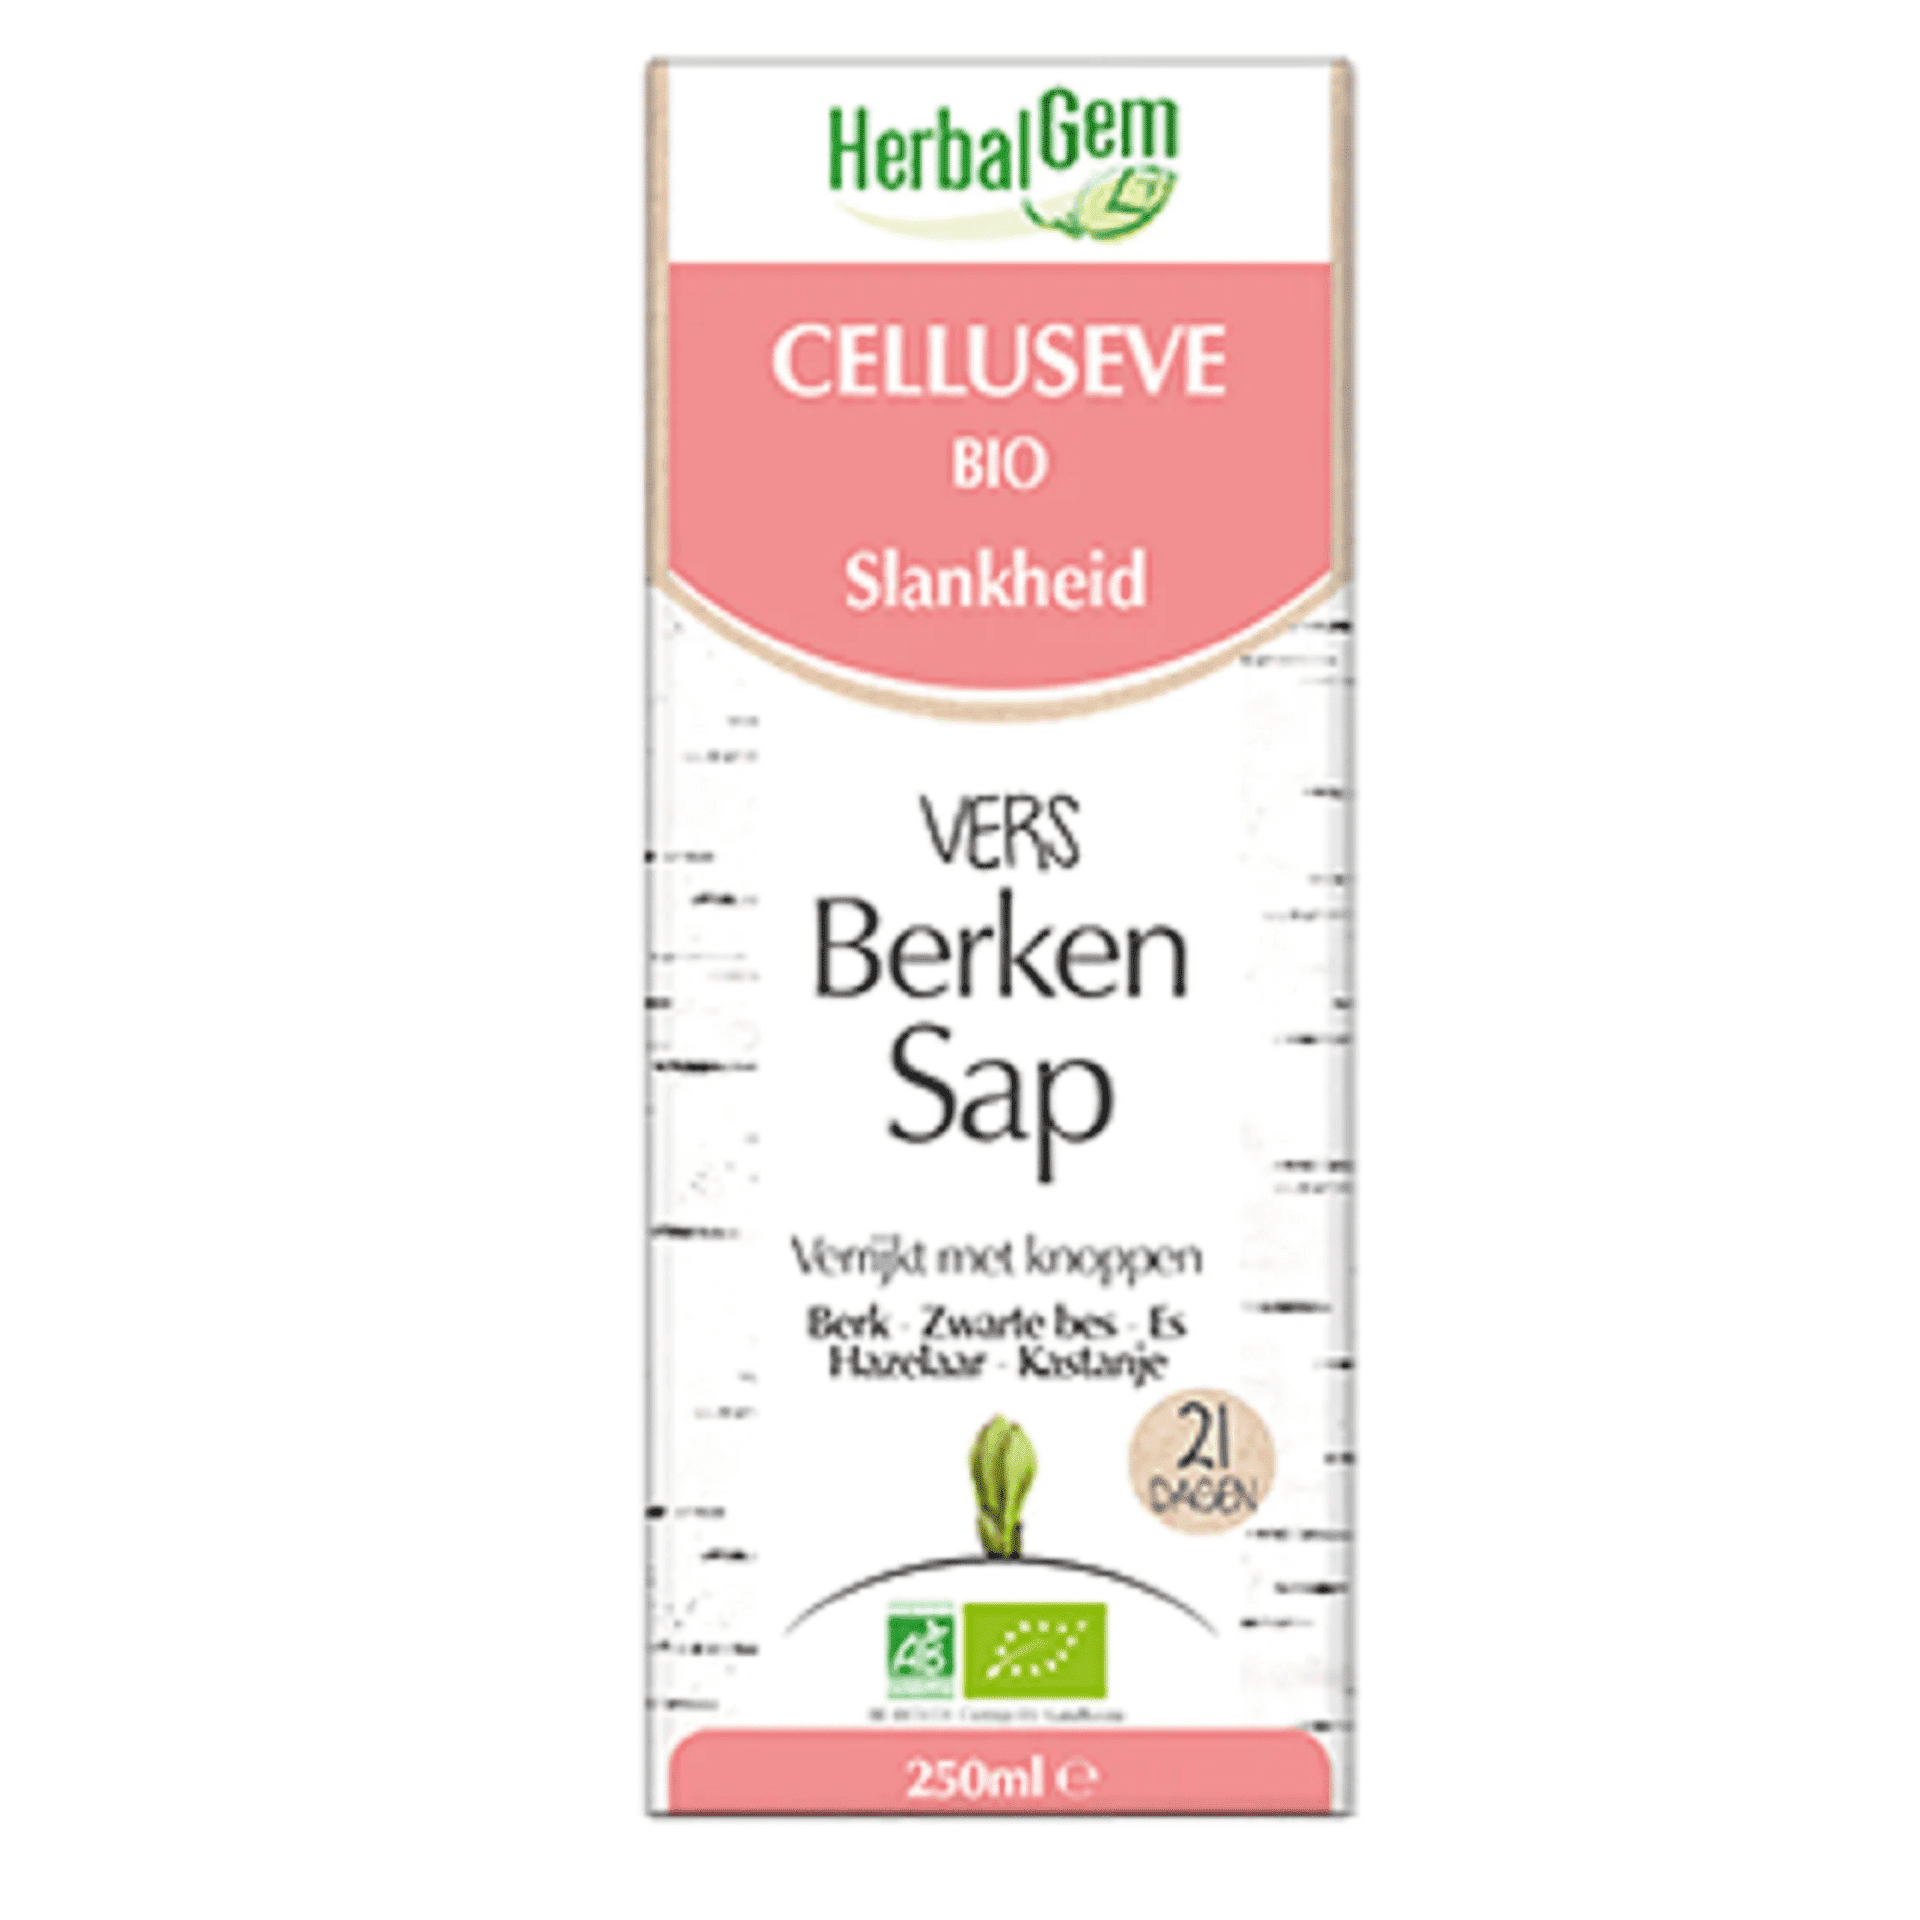 HerbalGem Celluseve 250 ml